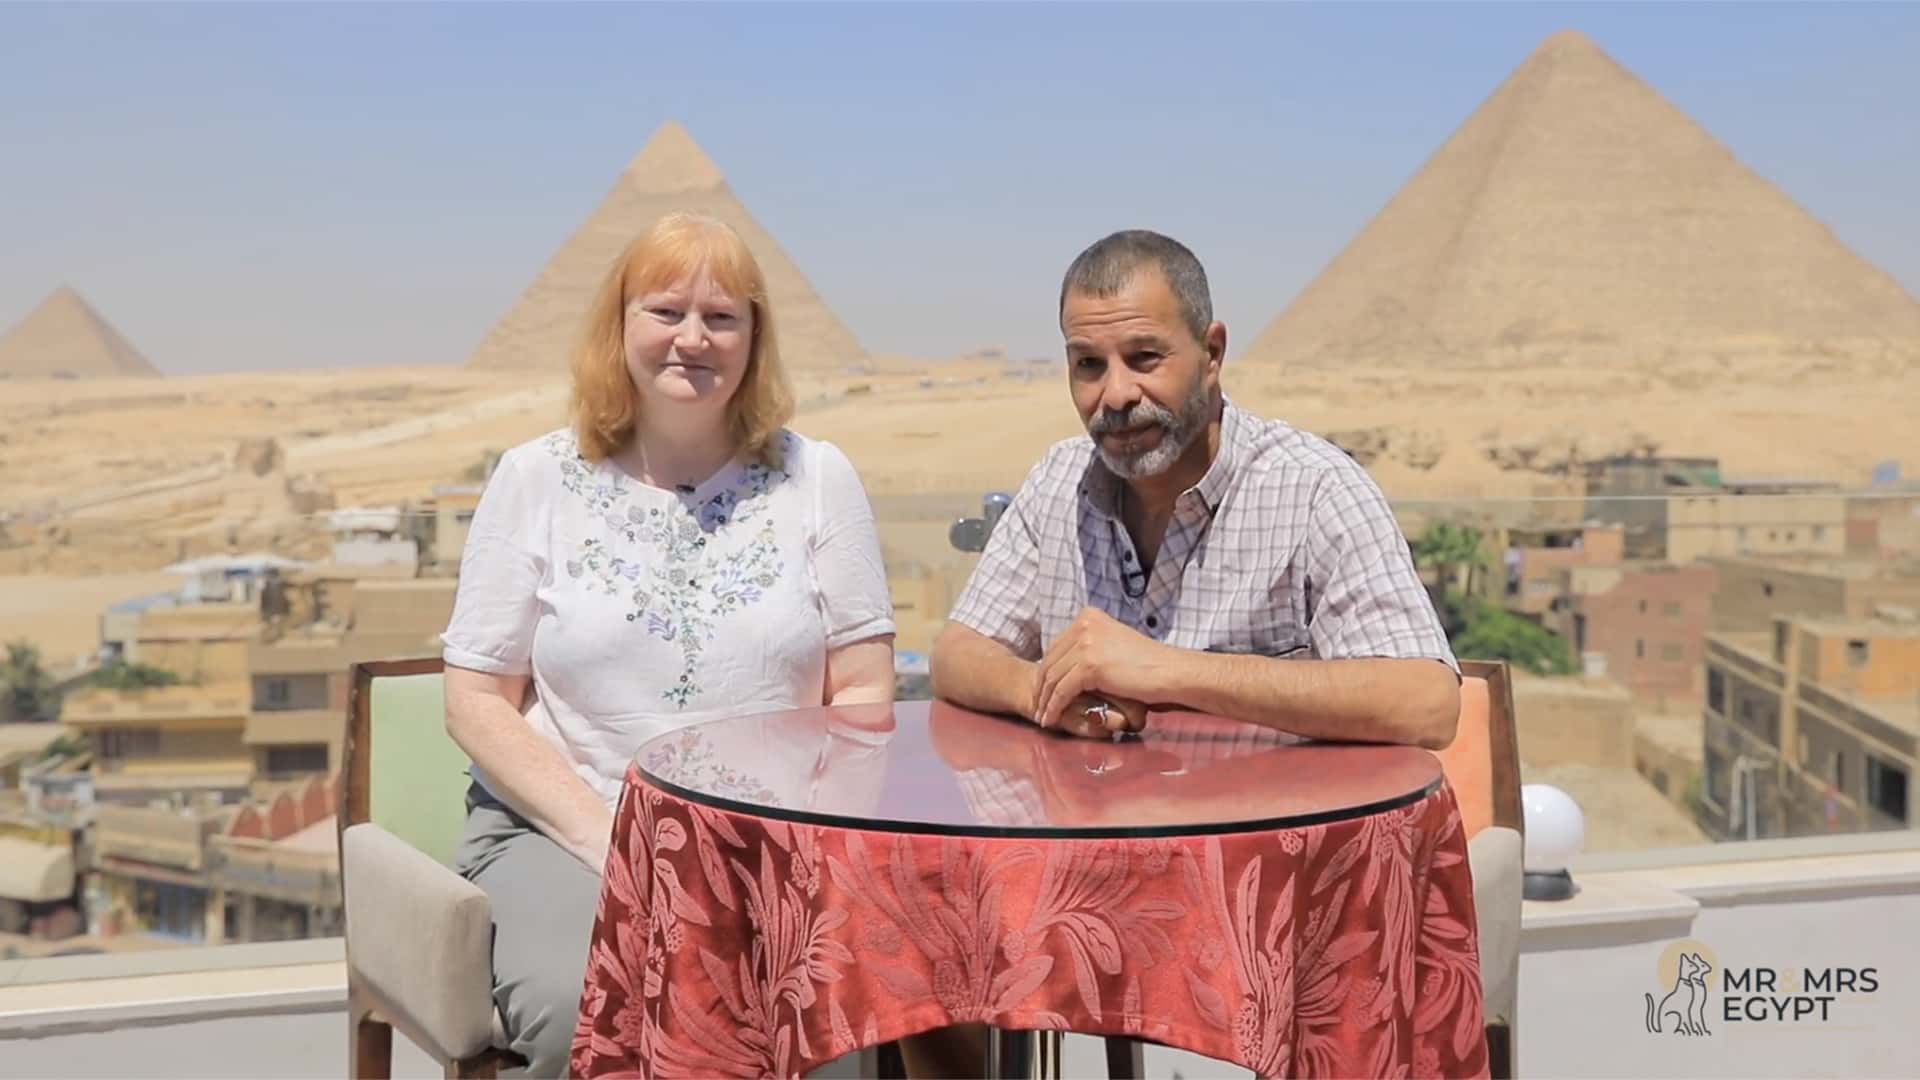 Meet Mr & Mrs Egypt